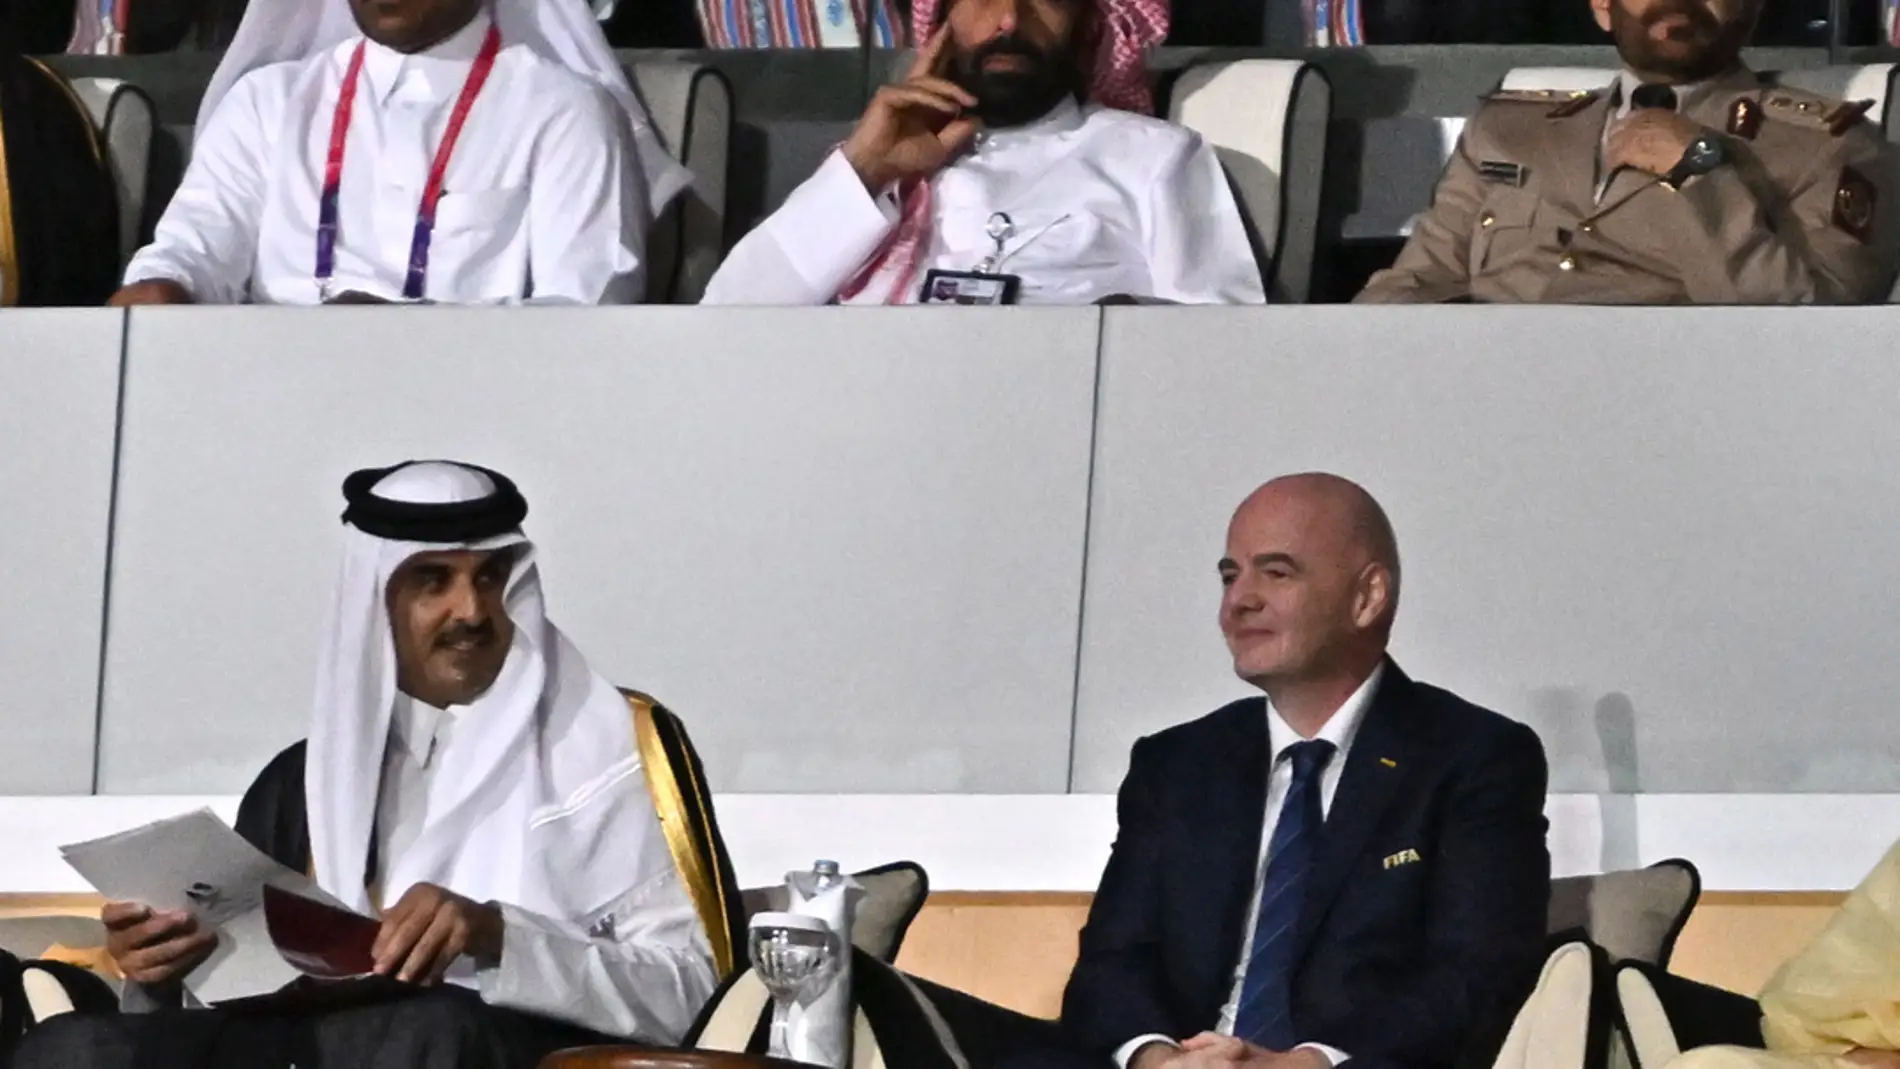 Gianni Infantino, presidente de FiFA, durante el pasado Mundial de Qatar